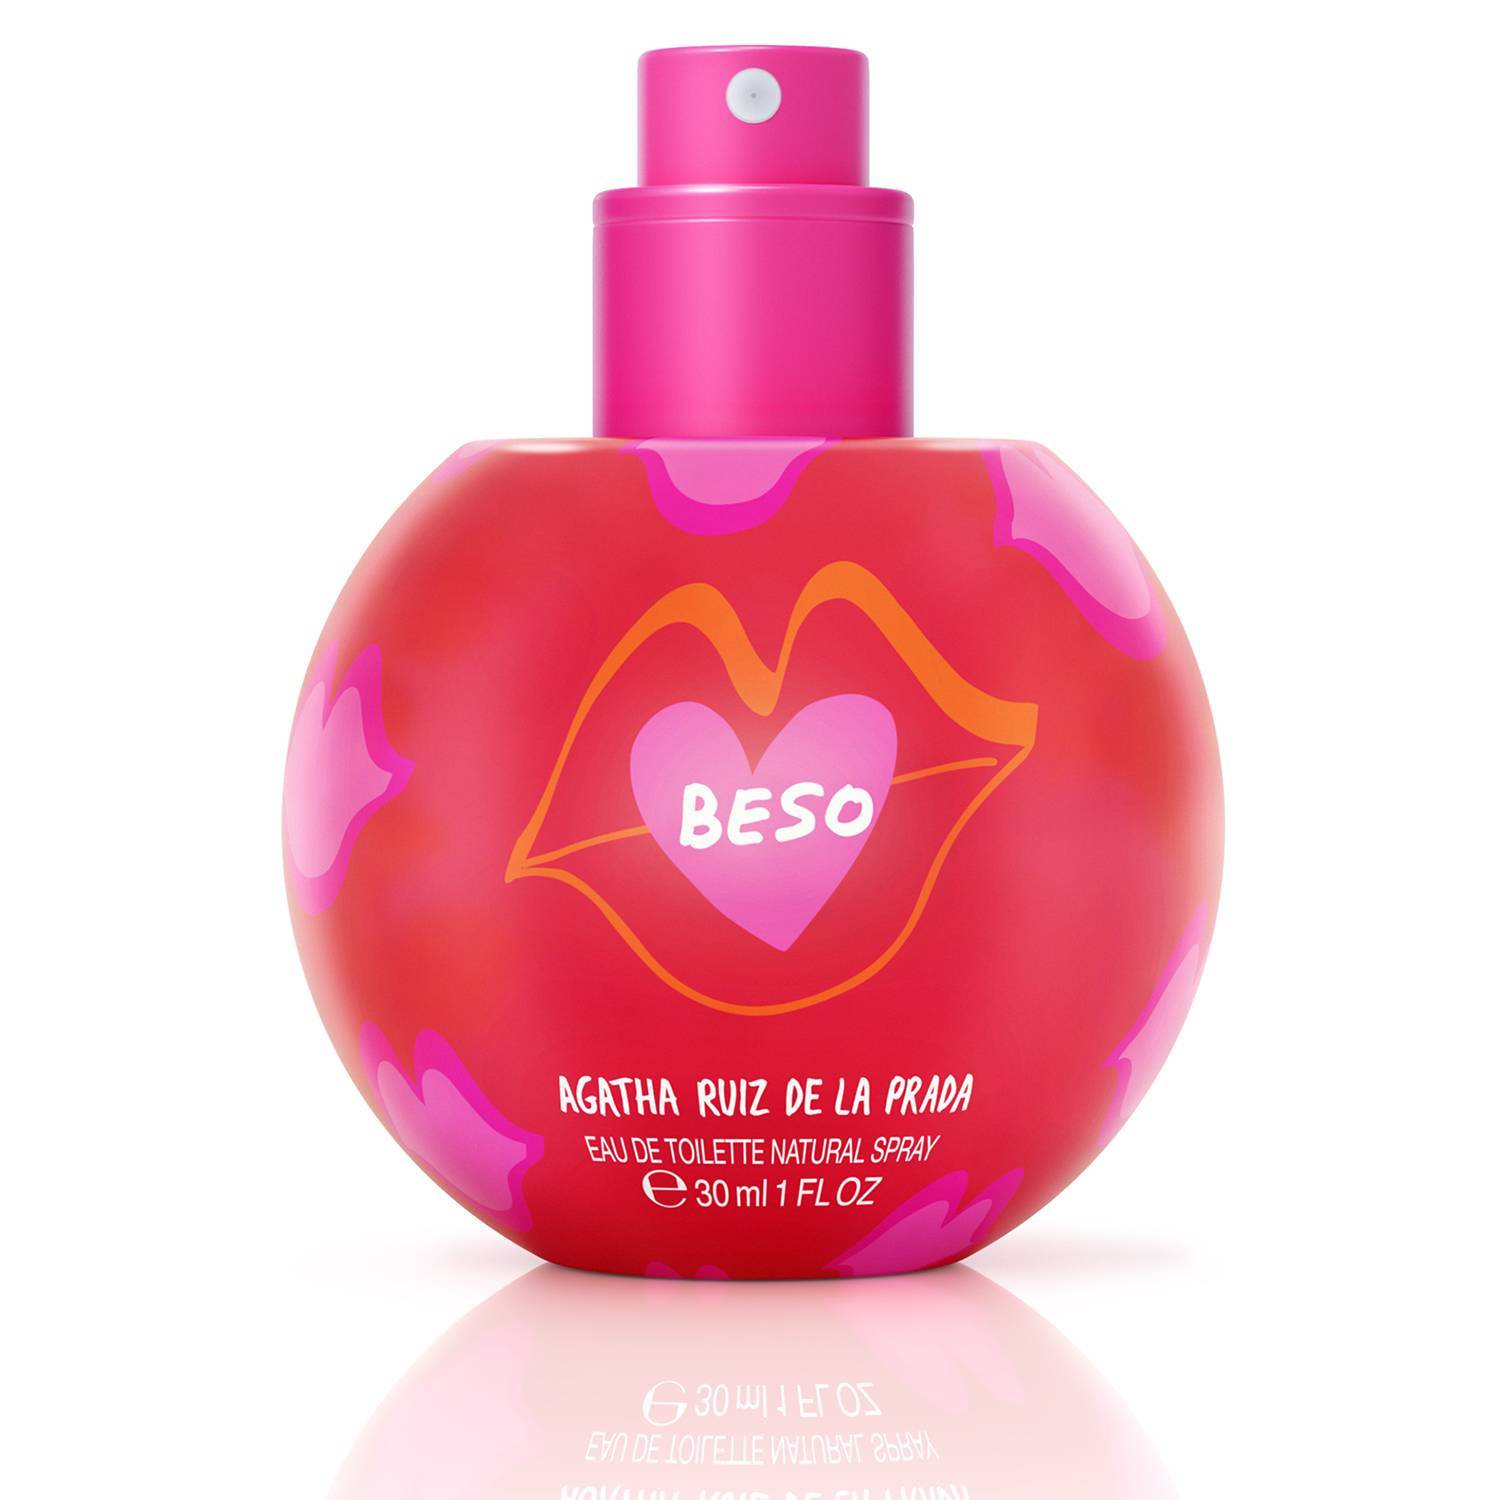 Beso Edt 30 ml producto sin caja - Agatha Ruiz De La Prada